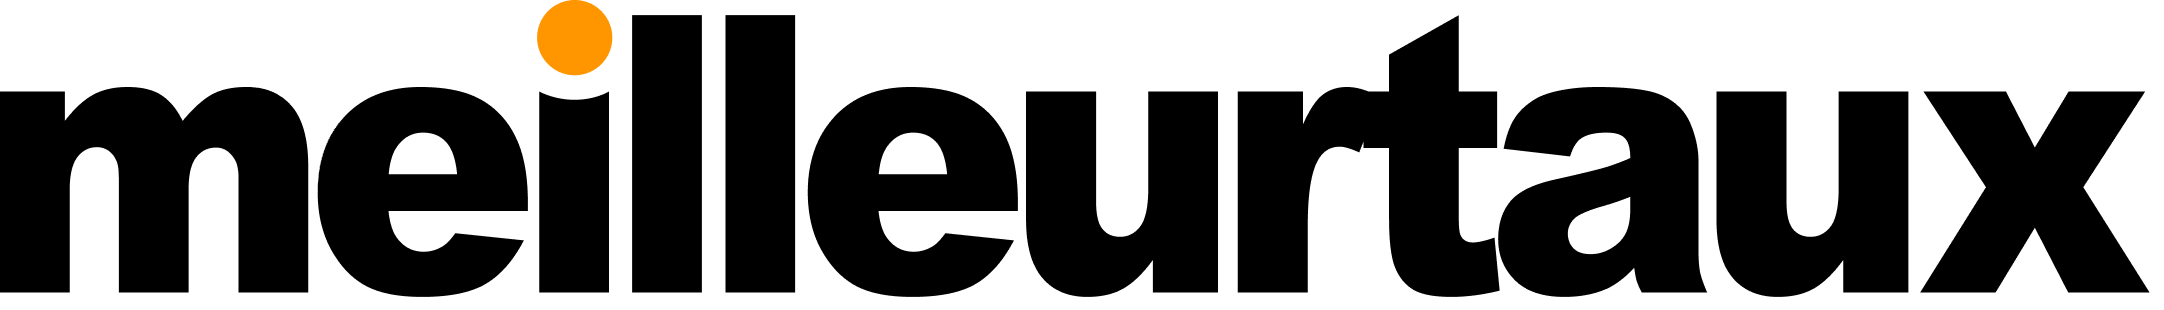 meilleurtaux logo